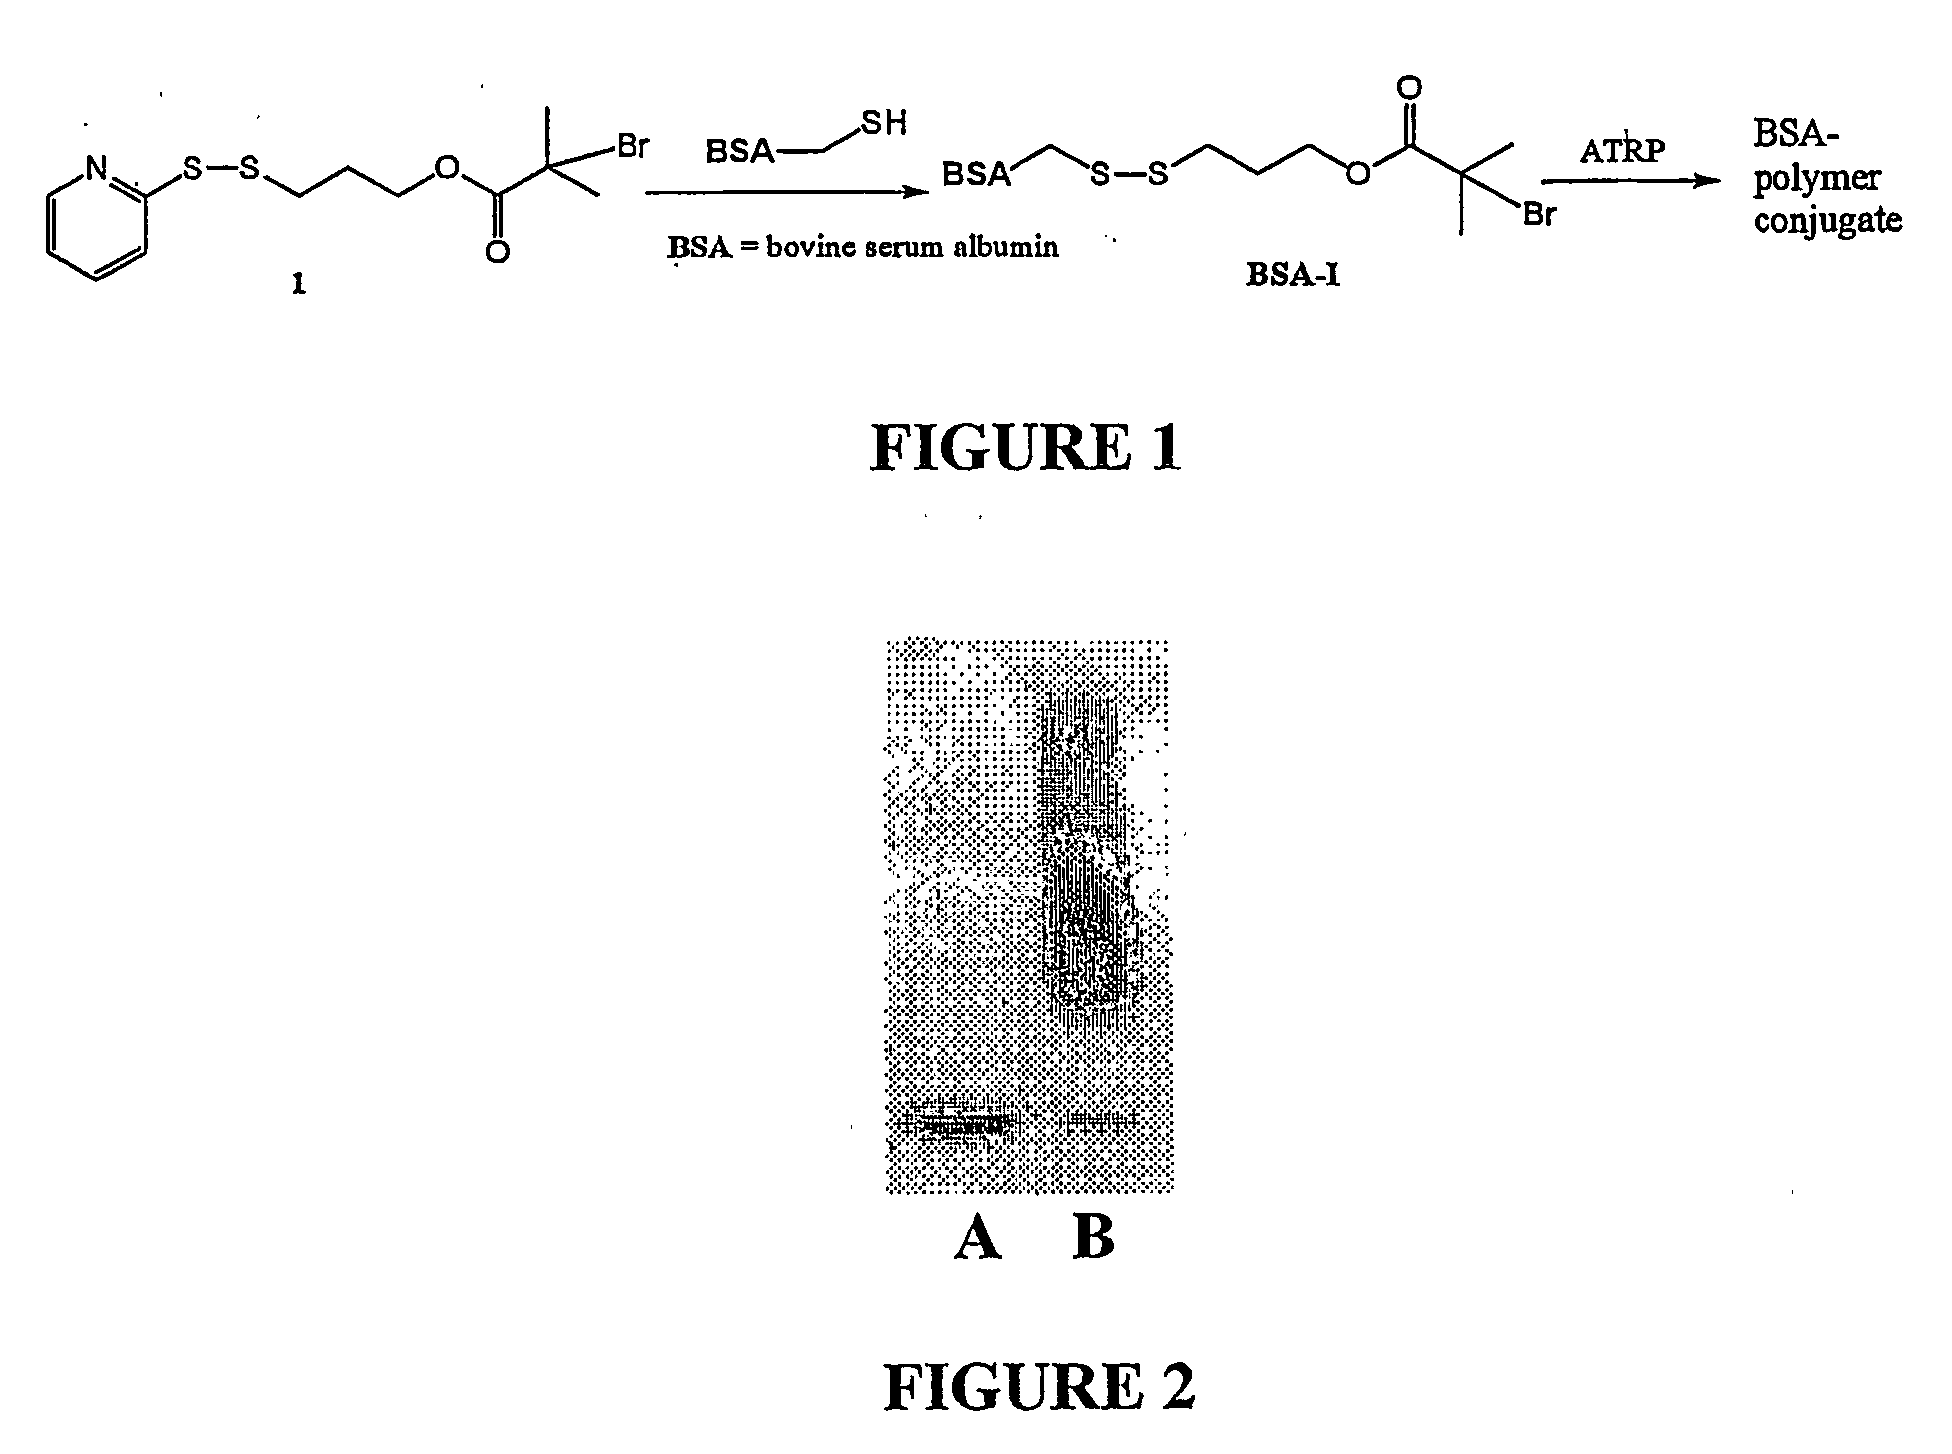 Biomacromolecule Polymer Conjugates